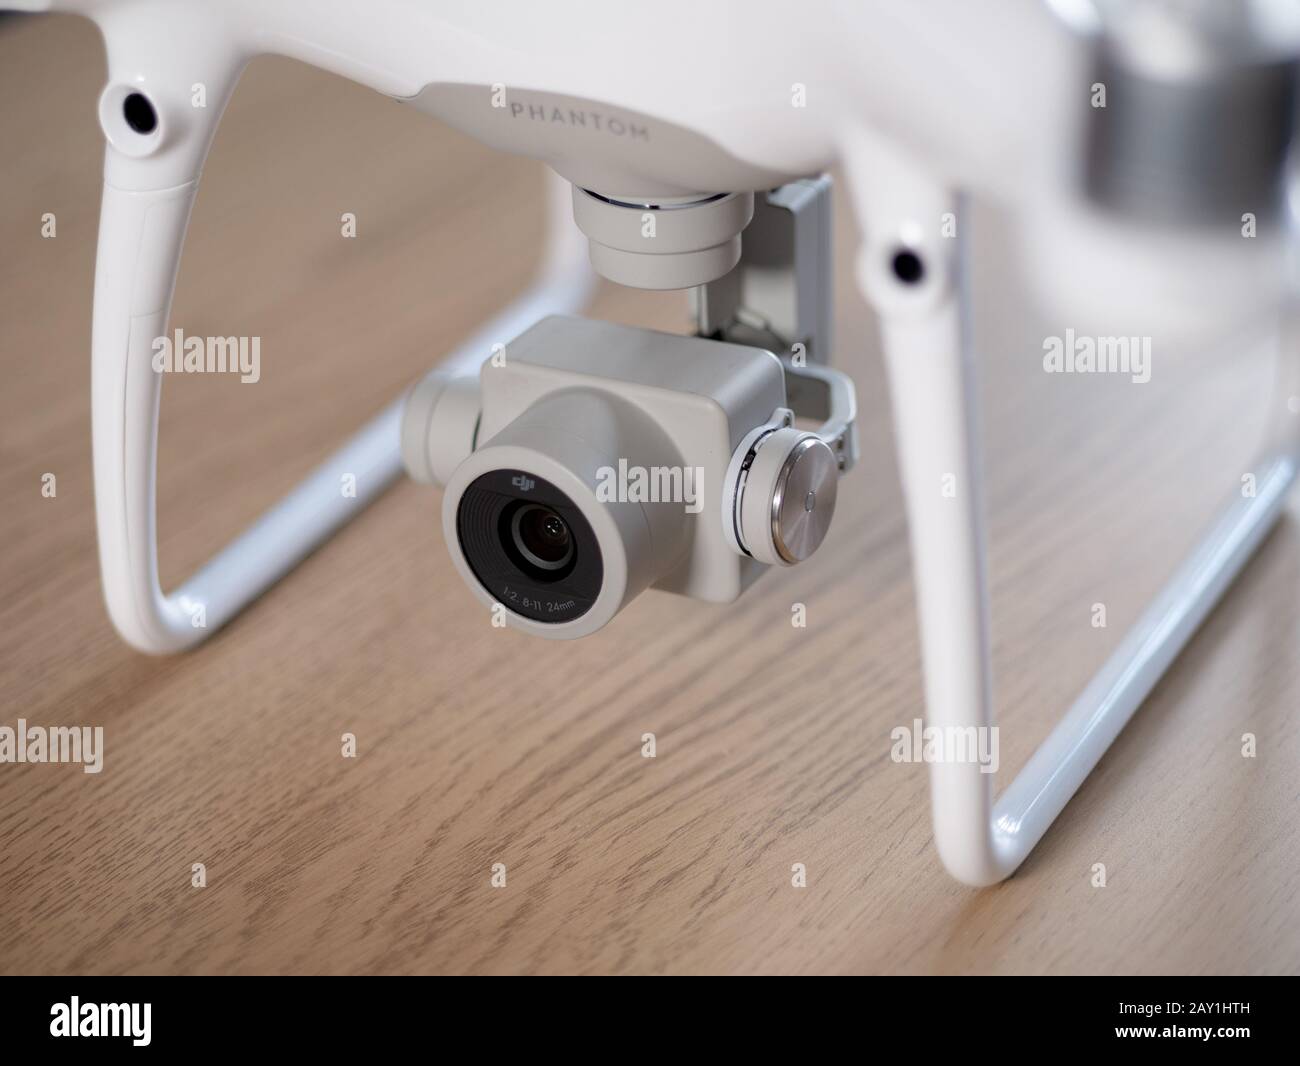 UK - Feb 2020: DJI Phantom 4 drone camera and landing gears on wooden  background Stock Photo - Alamy